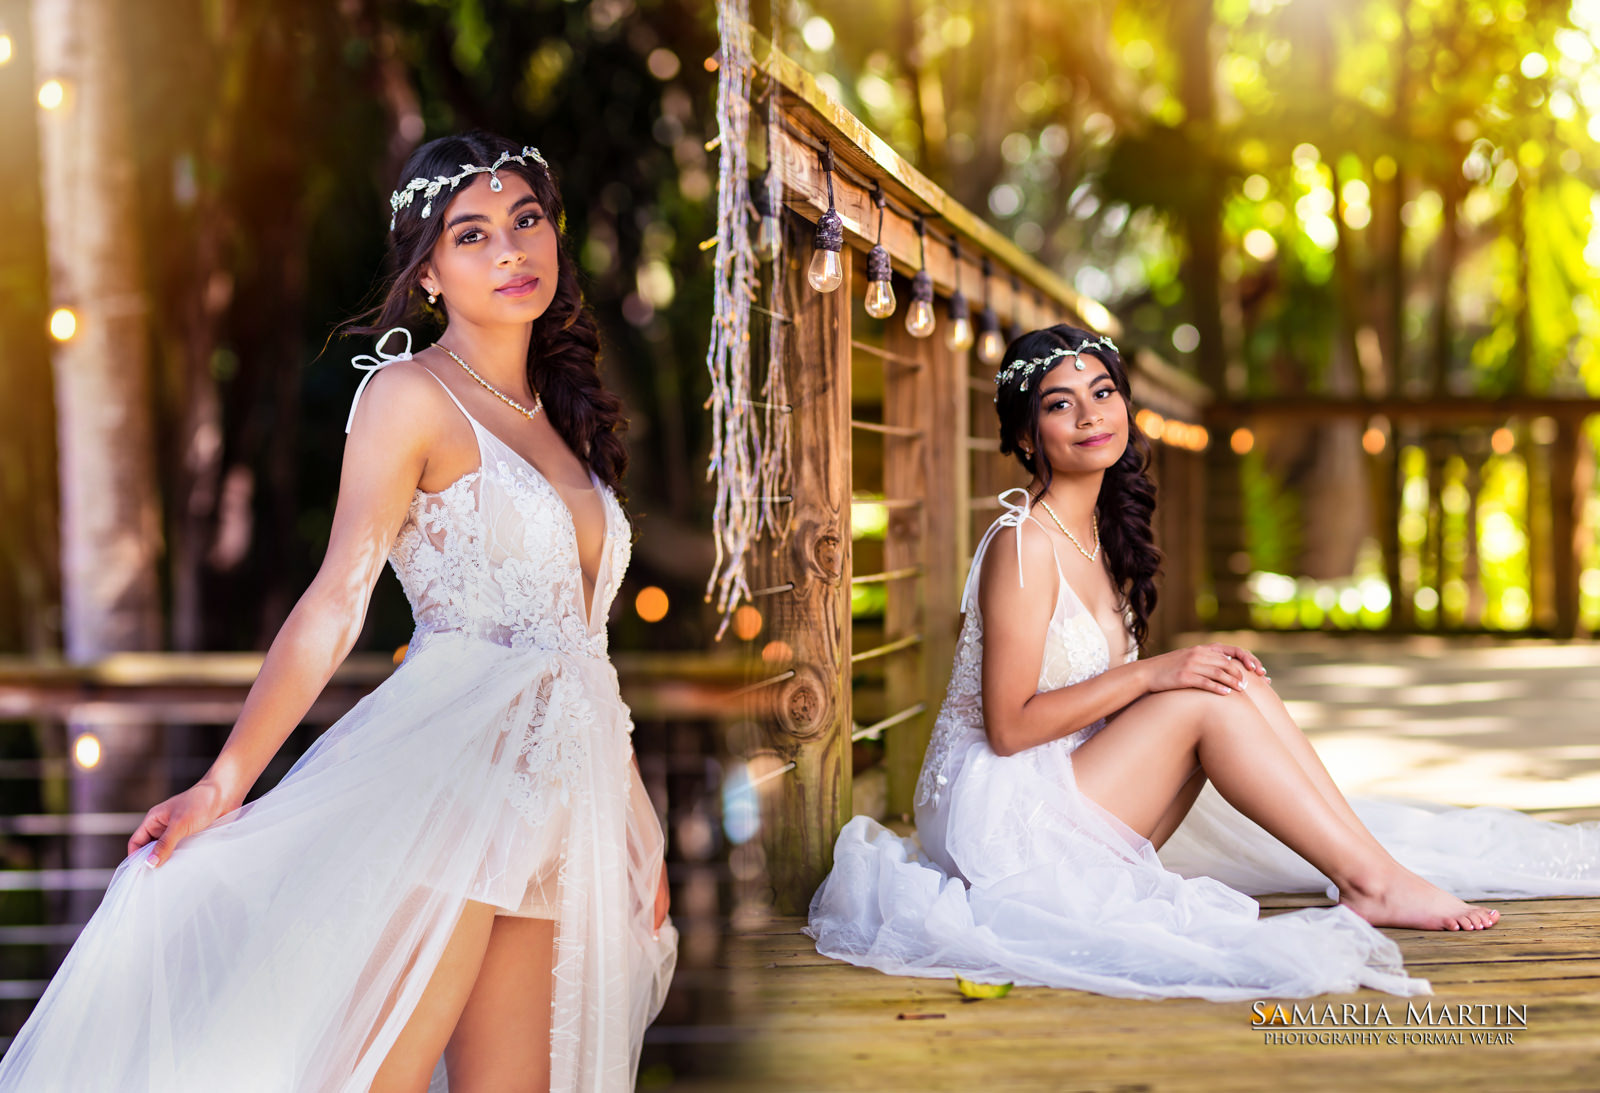 15 photoshoot with flowers, best Miami photographer, Samaria Martin, white quinceanera dresses, Miami Villa Turqueza 1